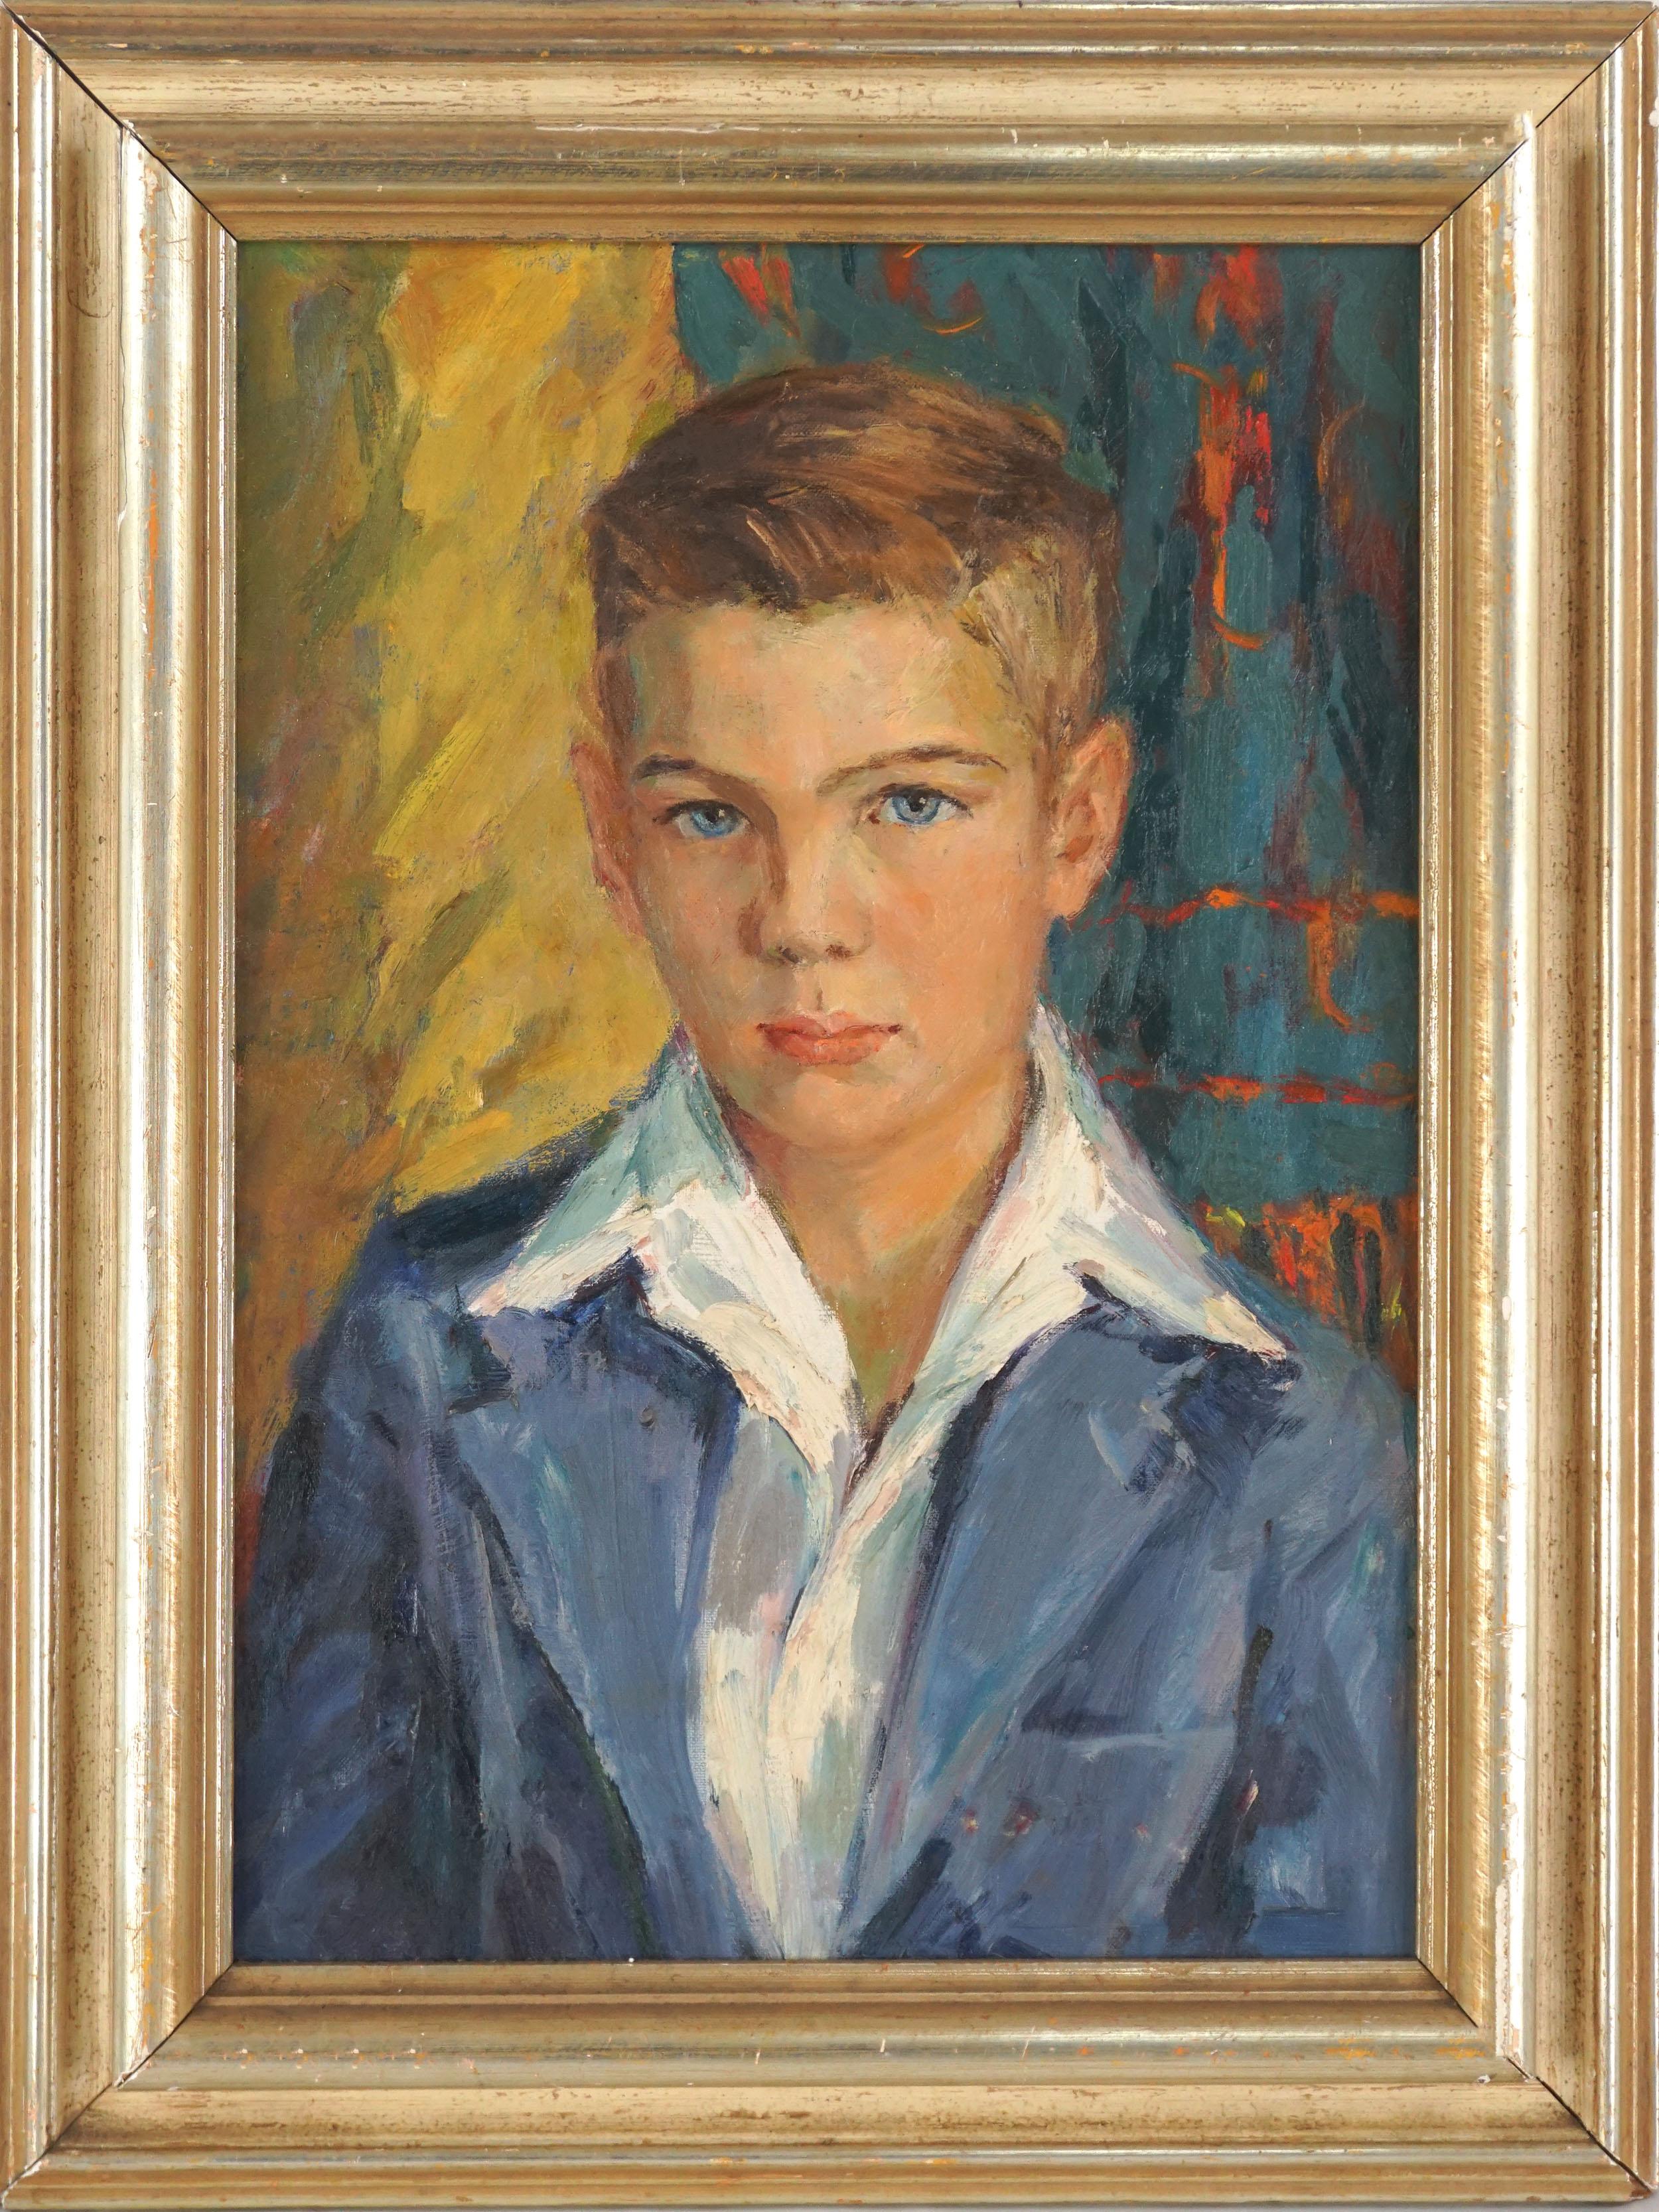 California School Portrait Painting - Beautiful Blue Eyed Boy Vintage Portrait California Impressionist